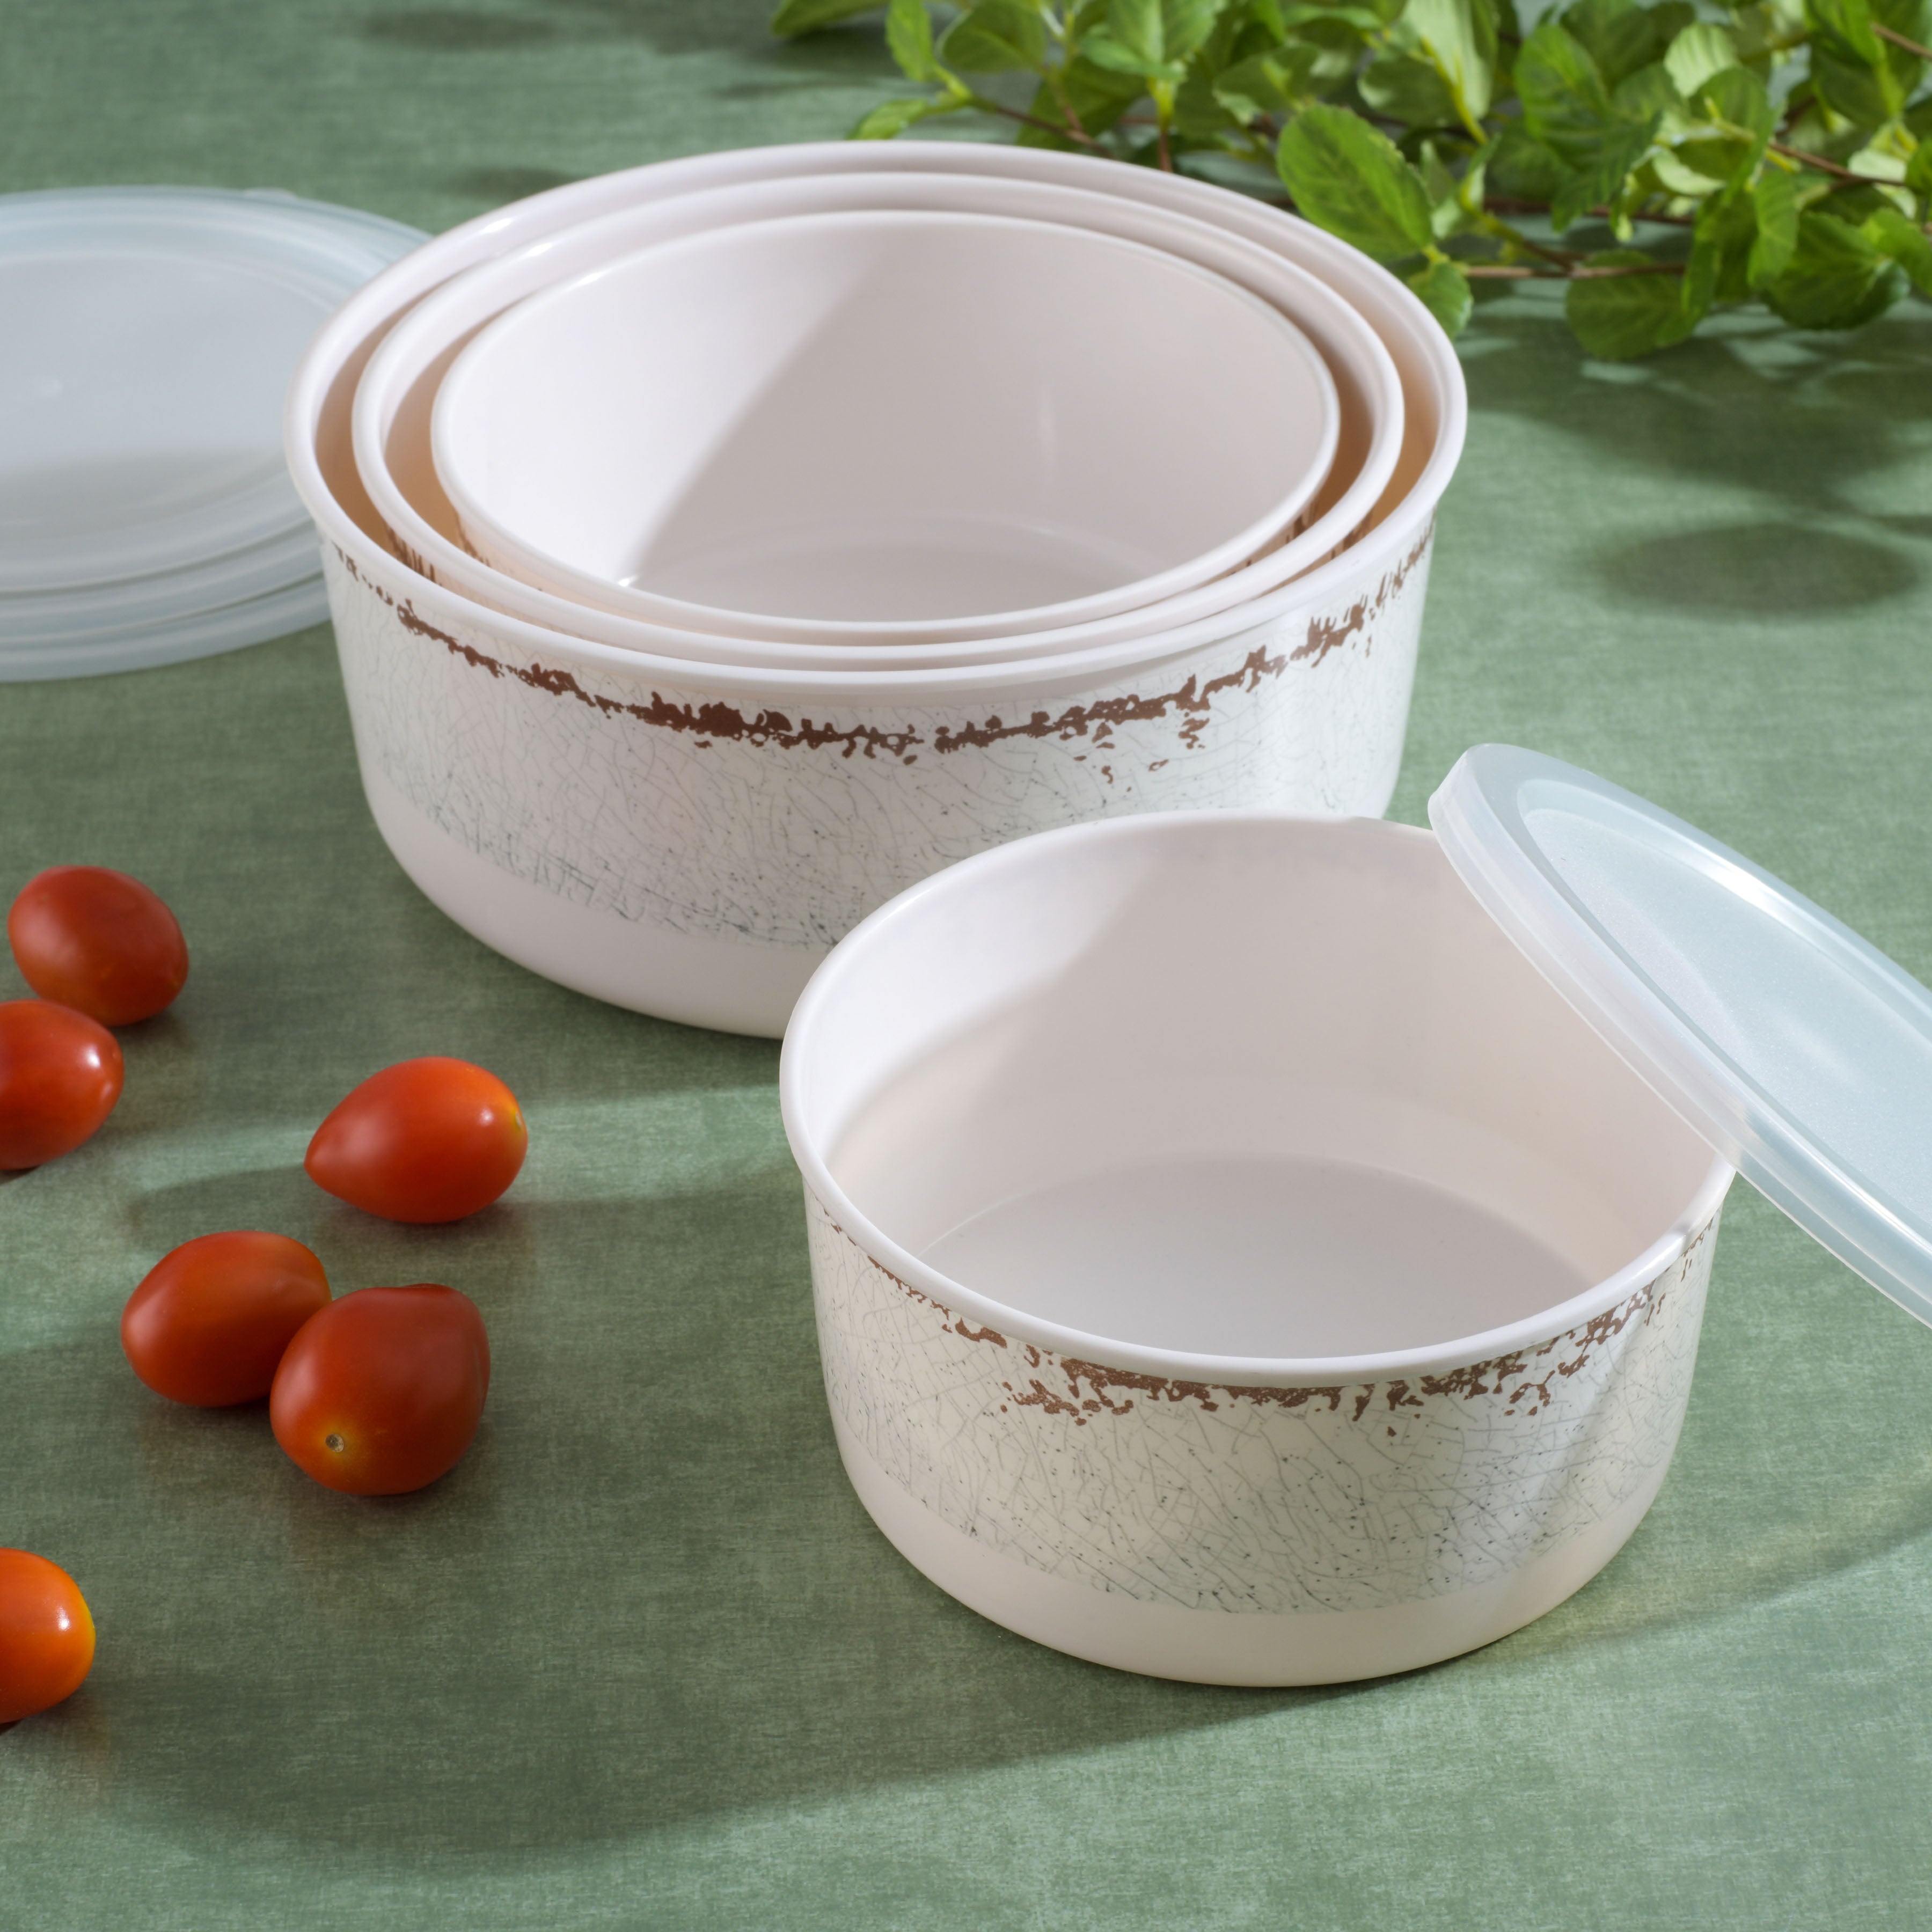 Laurie Gates California Designs Mauna 8-Piece Melamine Nesting Food Storage Bowl Set in Cracked White